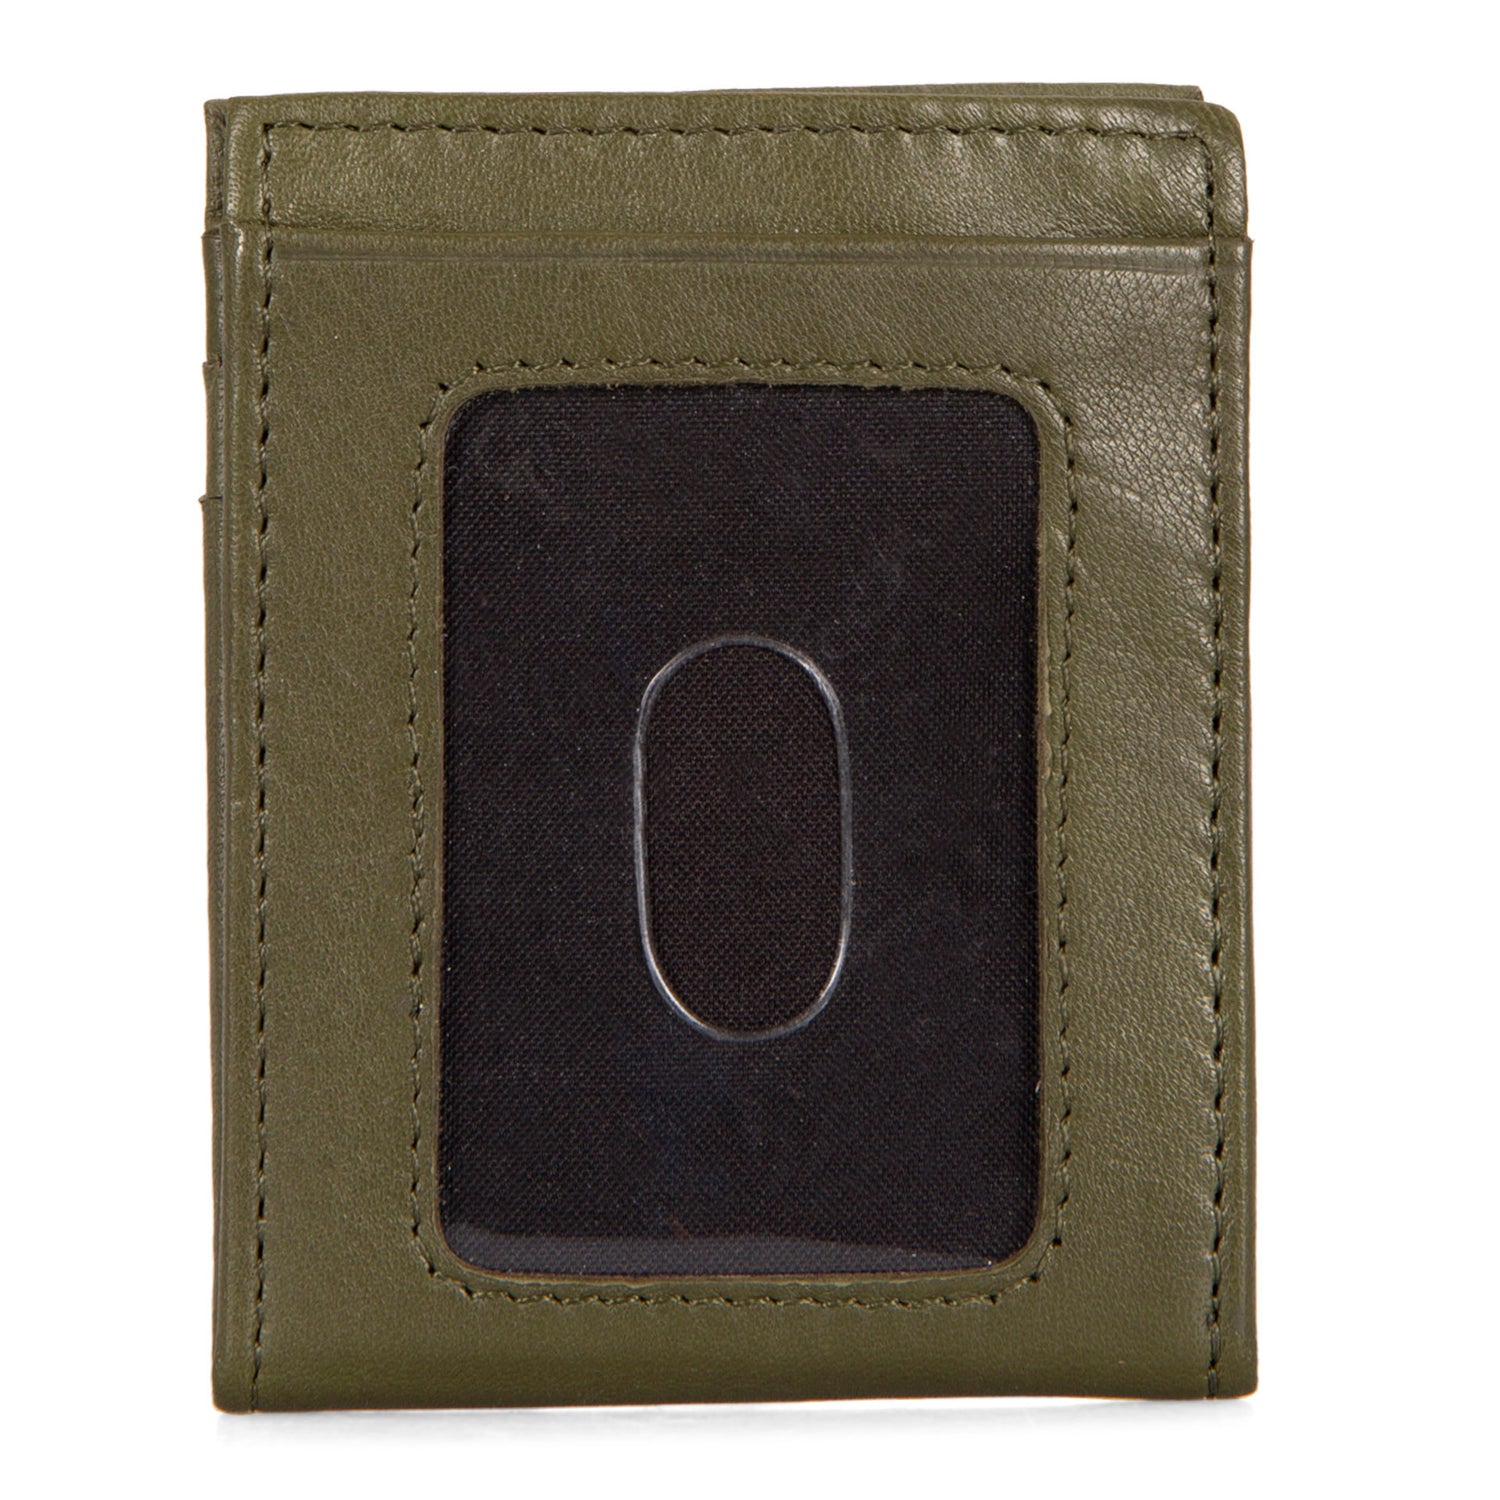 Minimalist RFID Magnetic Cardholder - Bentley